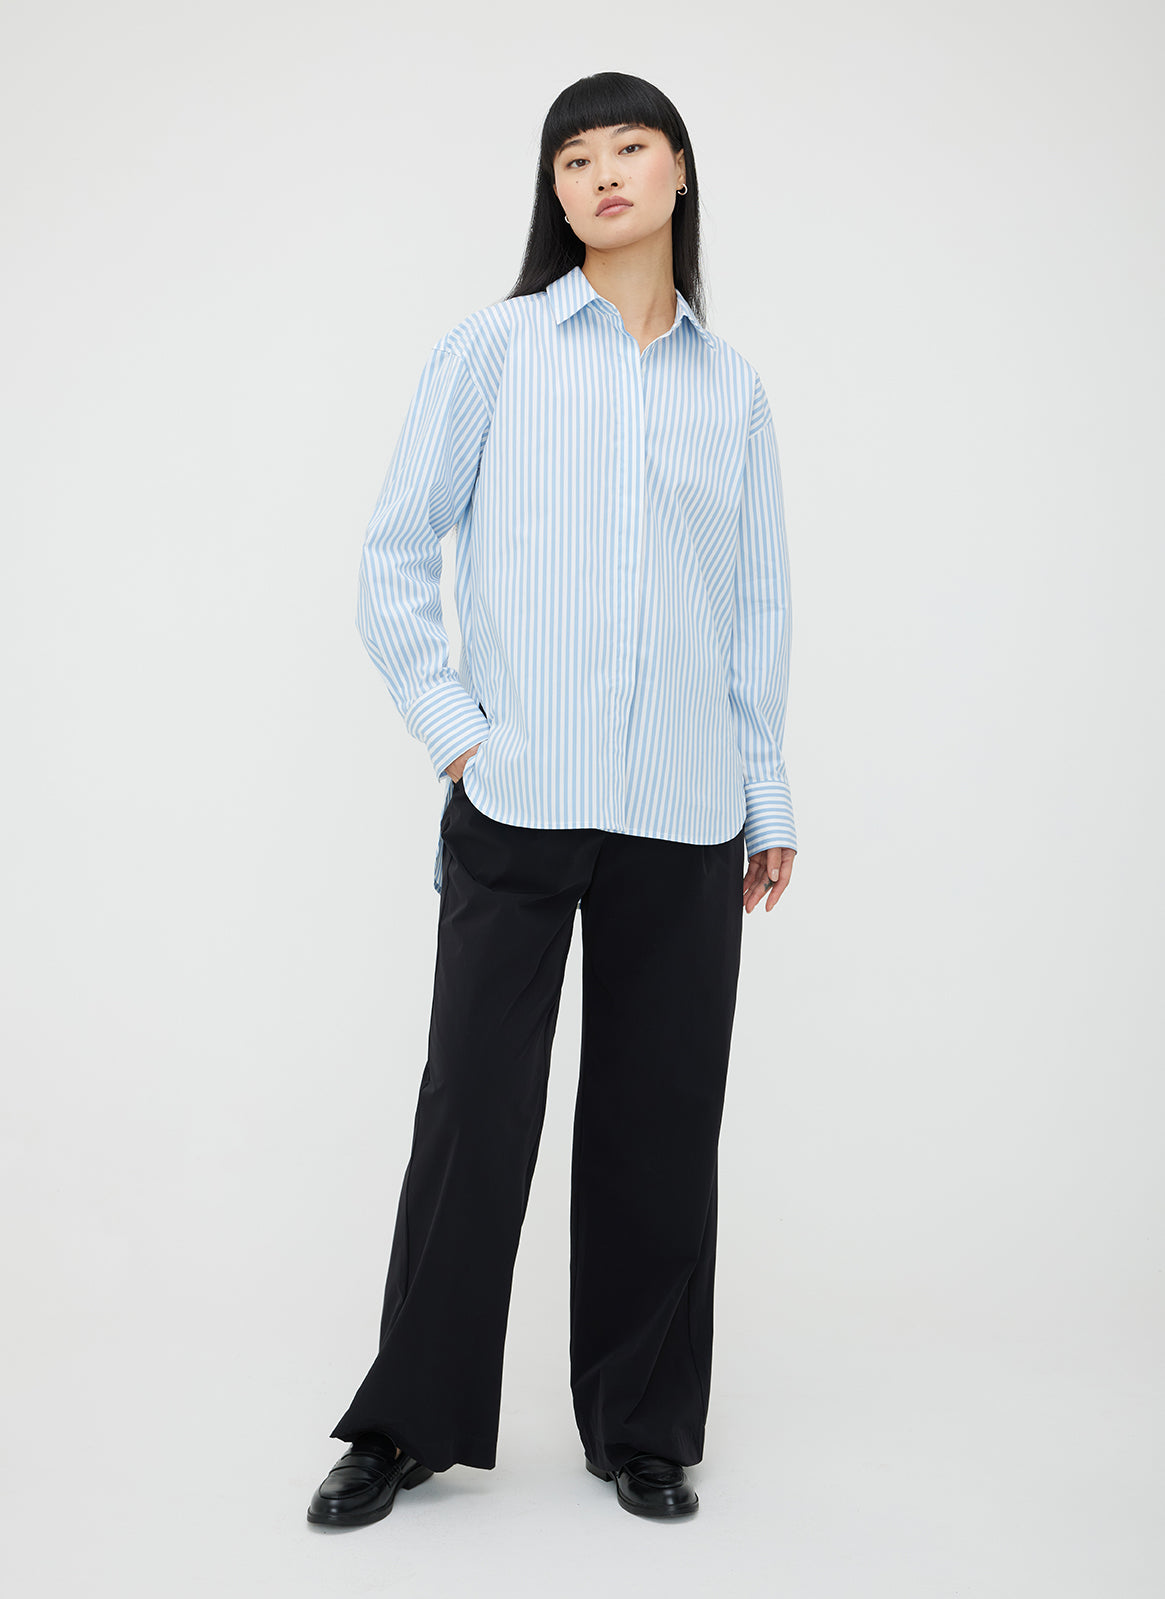 Marbella Boyfriend Shirt ?? || Bright White/Cool Blue Stripe